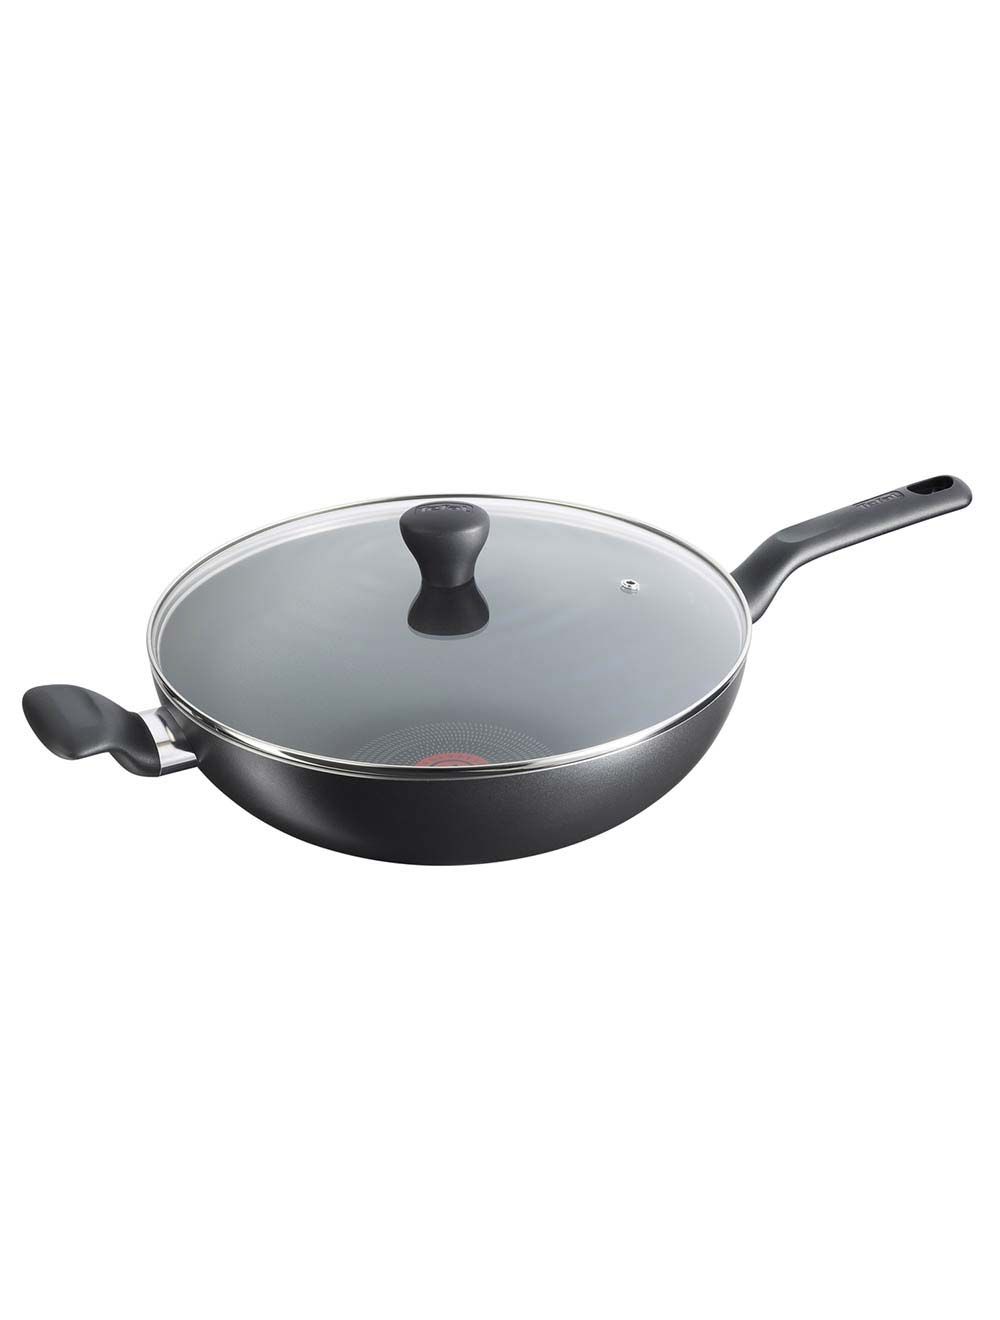 Tefal Super Cook Non-stick Easy Clean Wok Pan 28cm, B1431684